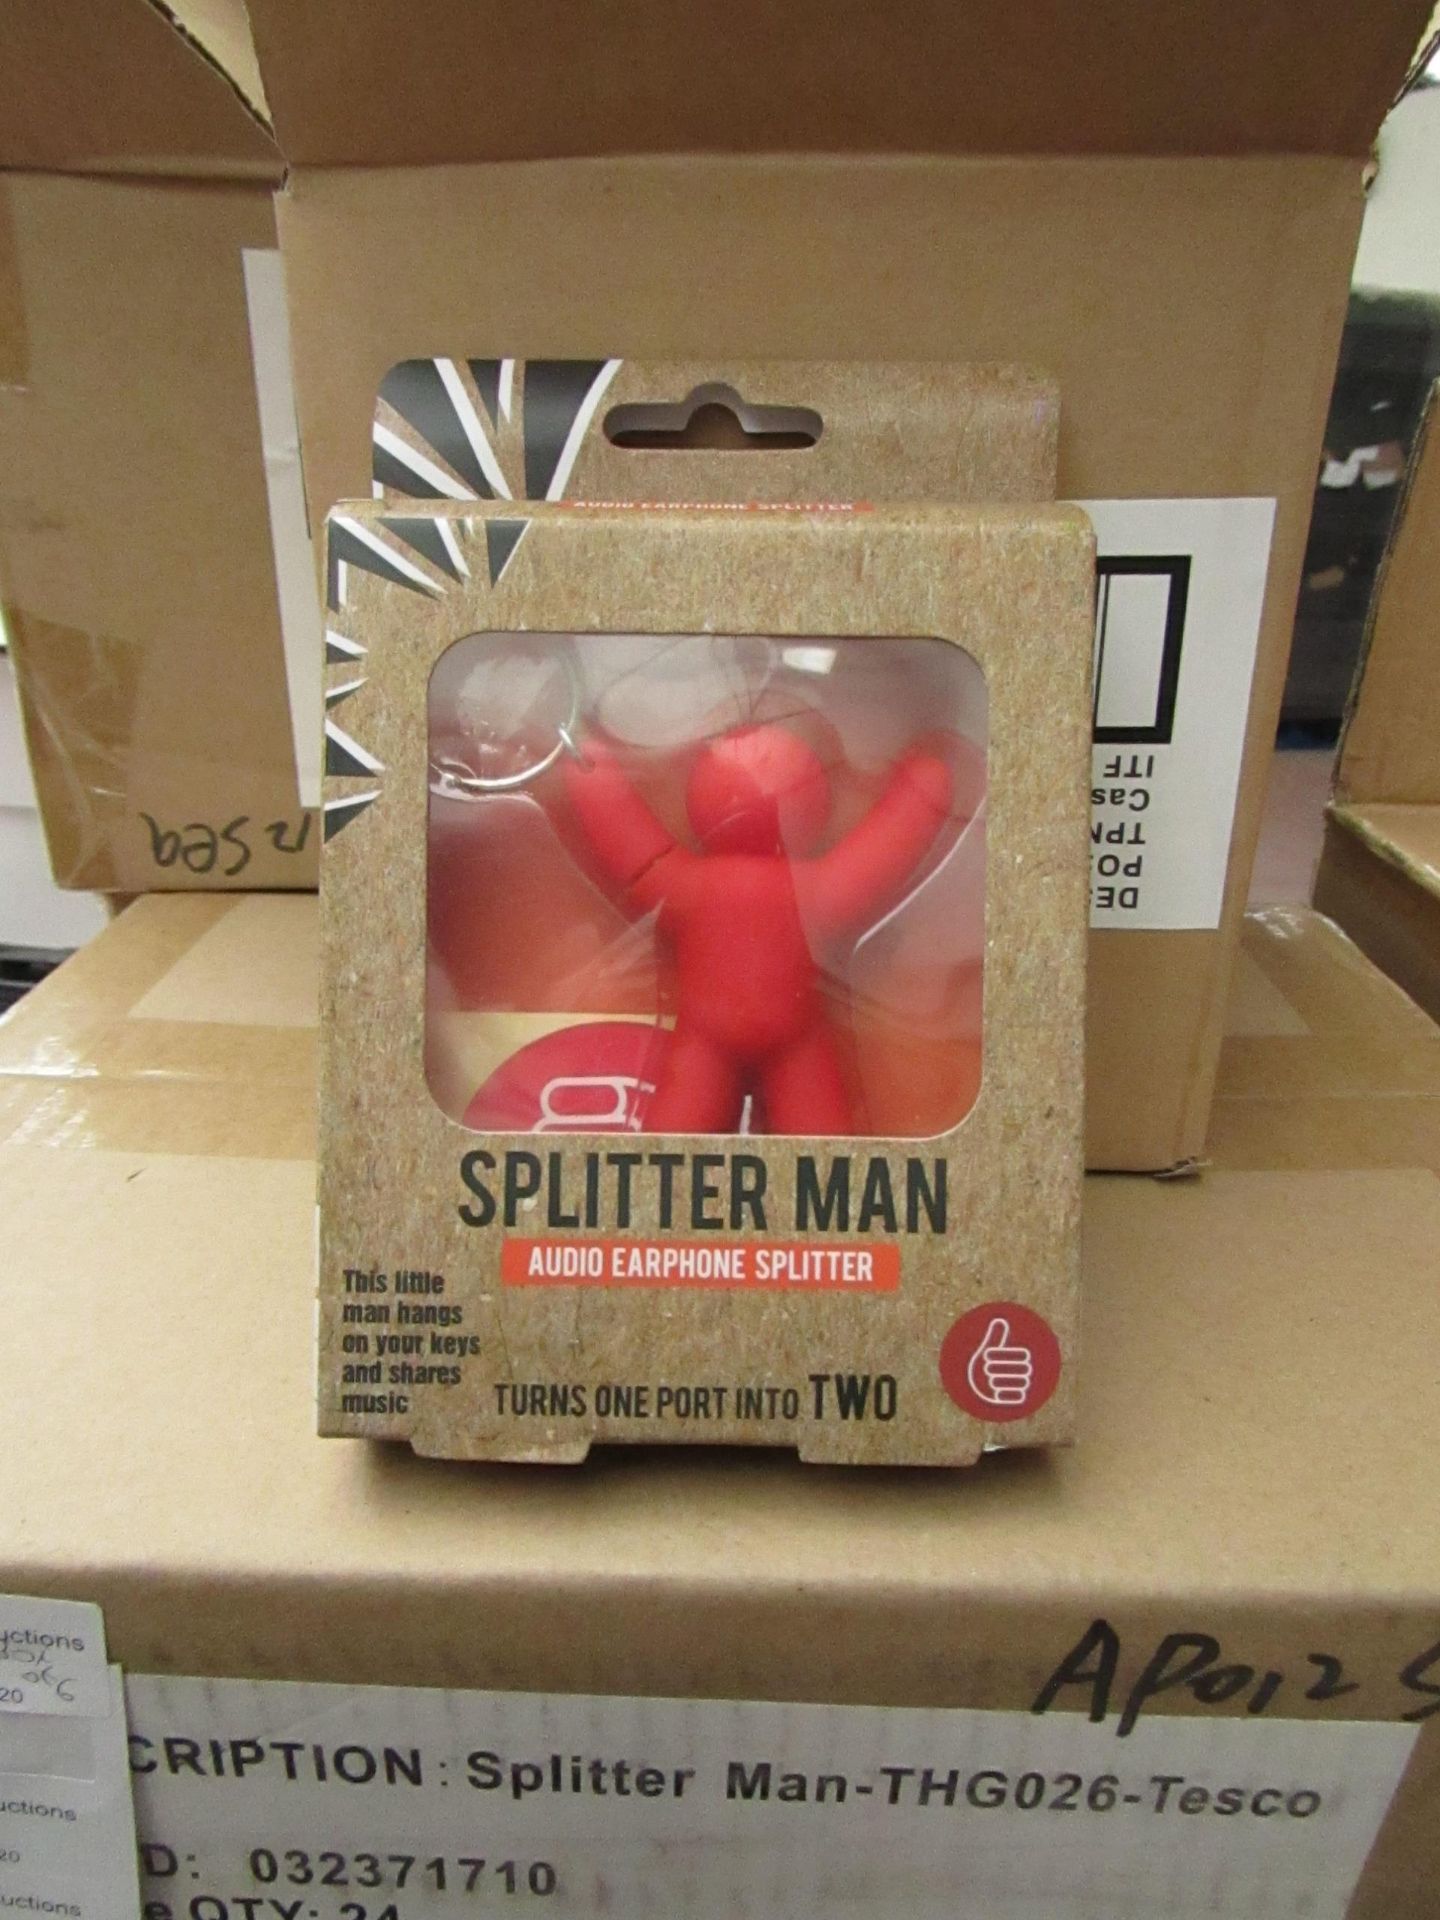 Box of 6 Splitter Man Earphone Splitters.Packaged